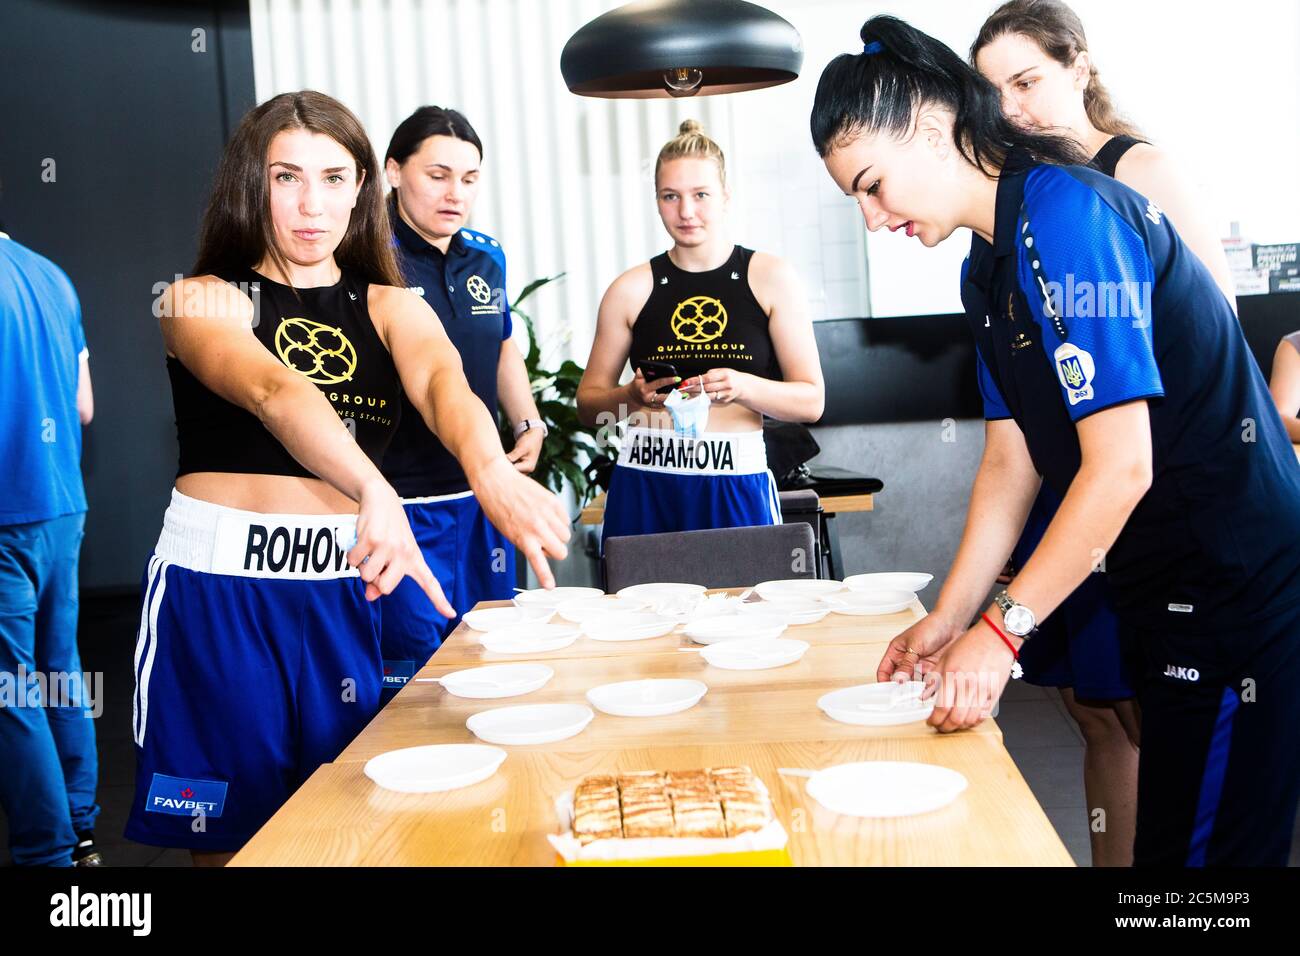 Ukrainian girls boxers incl Katya Rogova,left, and friends in Ukrainian Women's boxing League ready enjoy sweet cake w/drink after weigh in on scales. Stock Photo